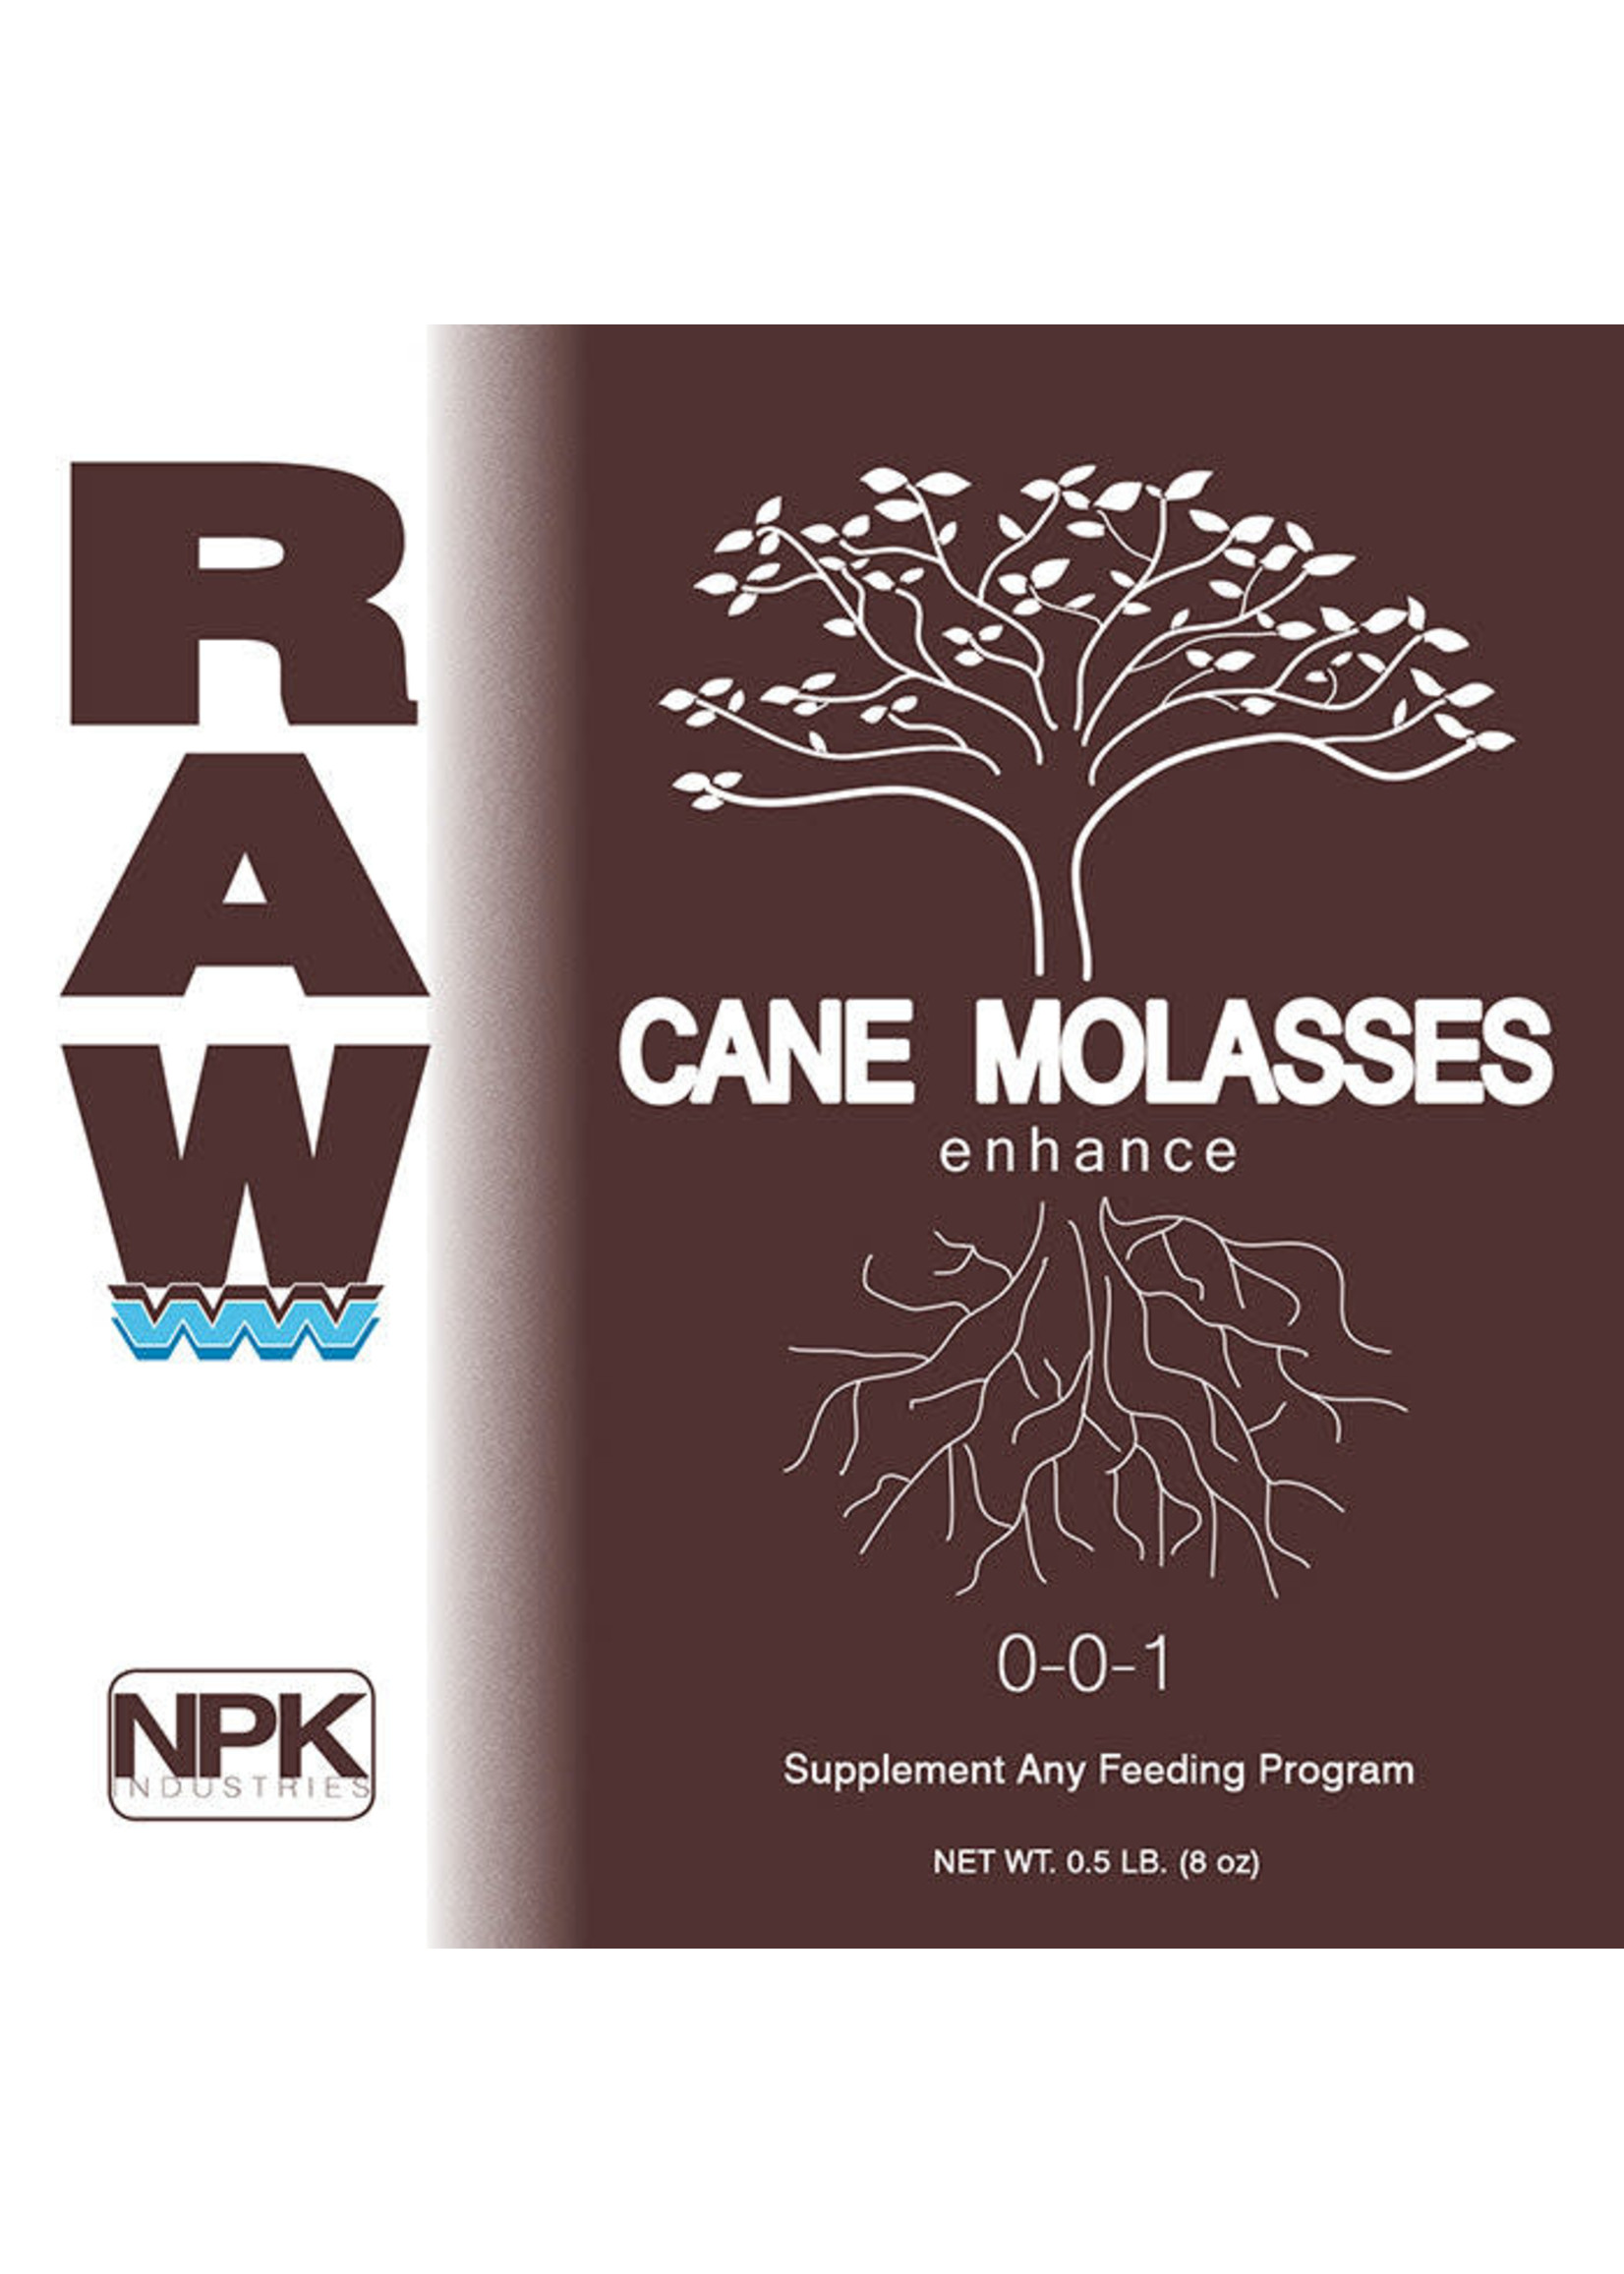 NPK Raw Cane Molasses